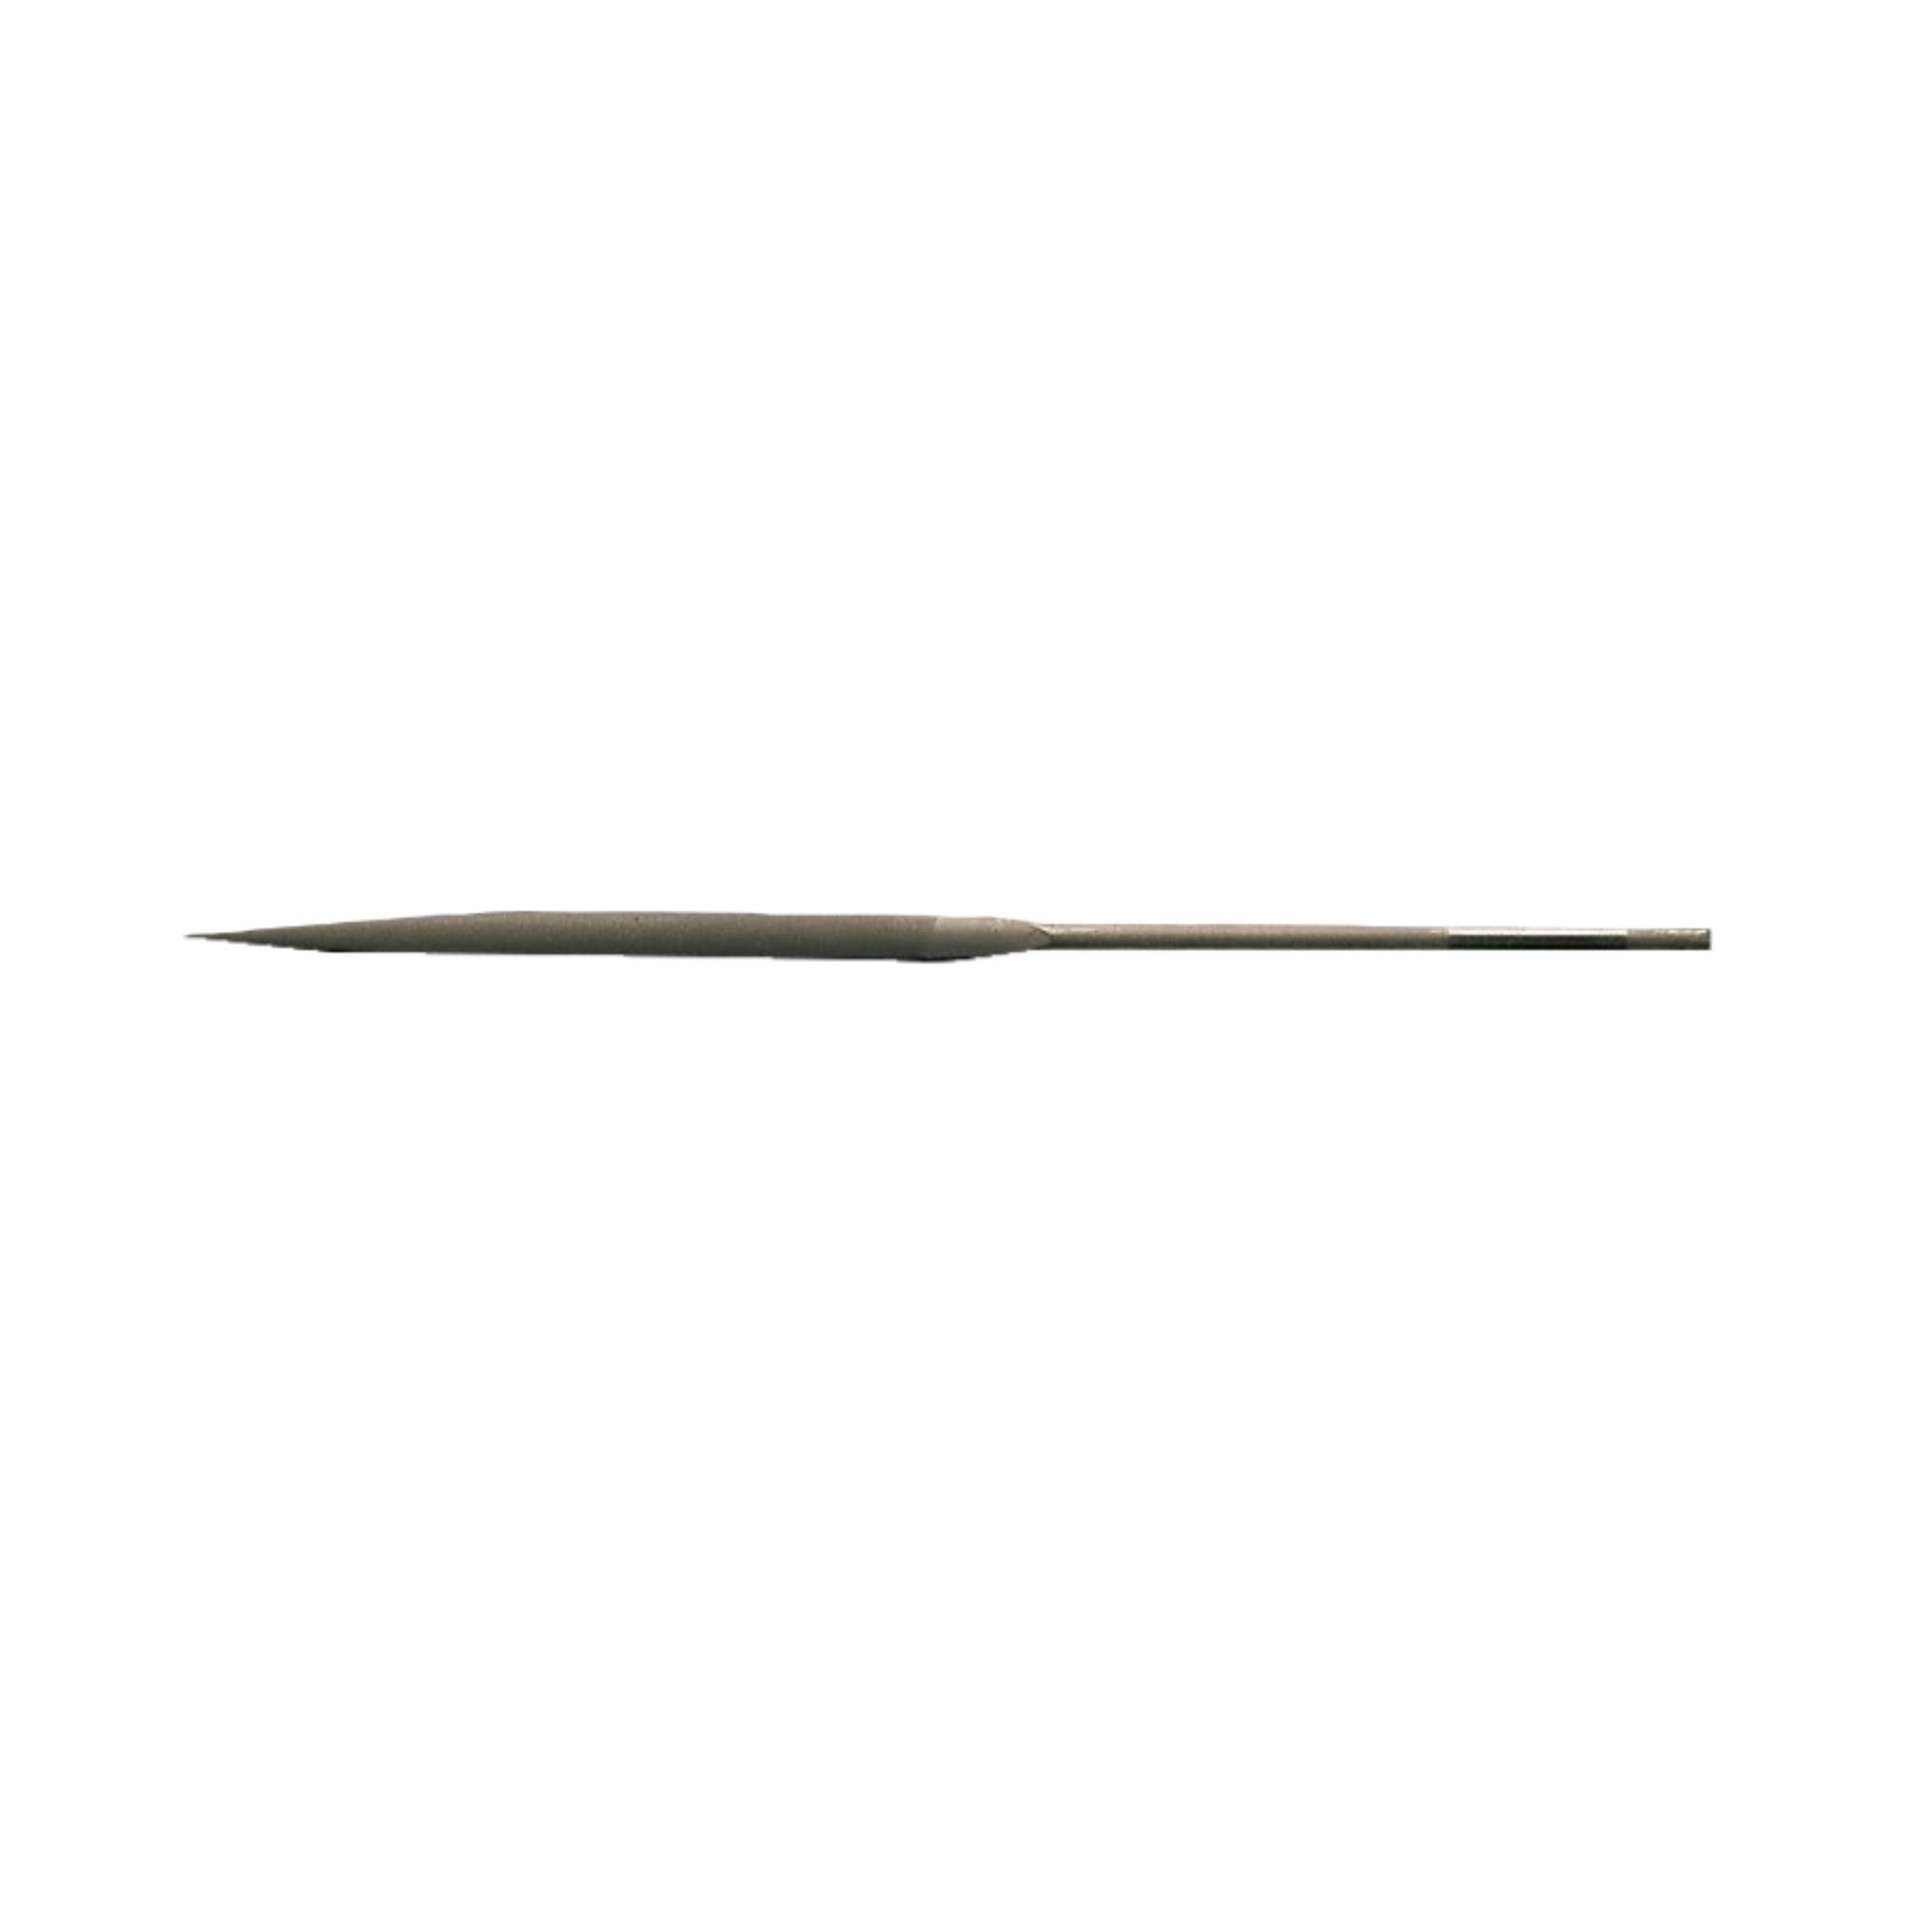 Half-round needle cut file - Bahco 2-304-16-1-0